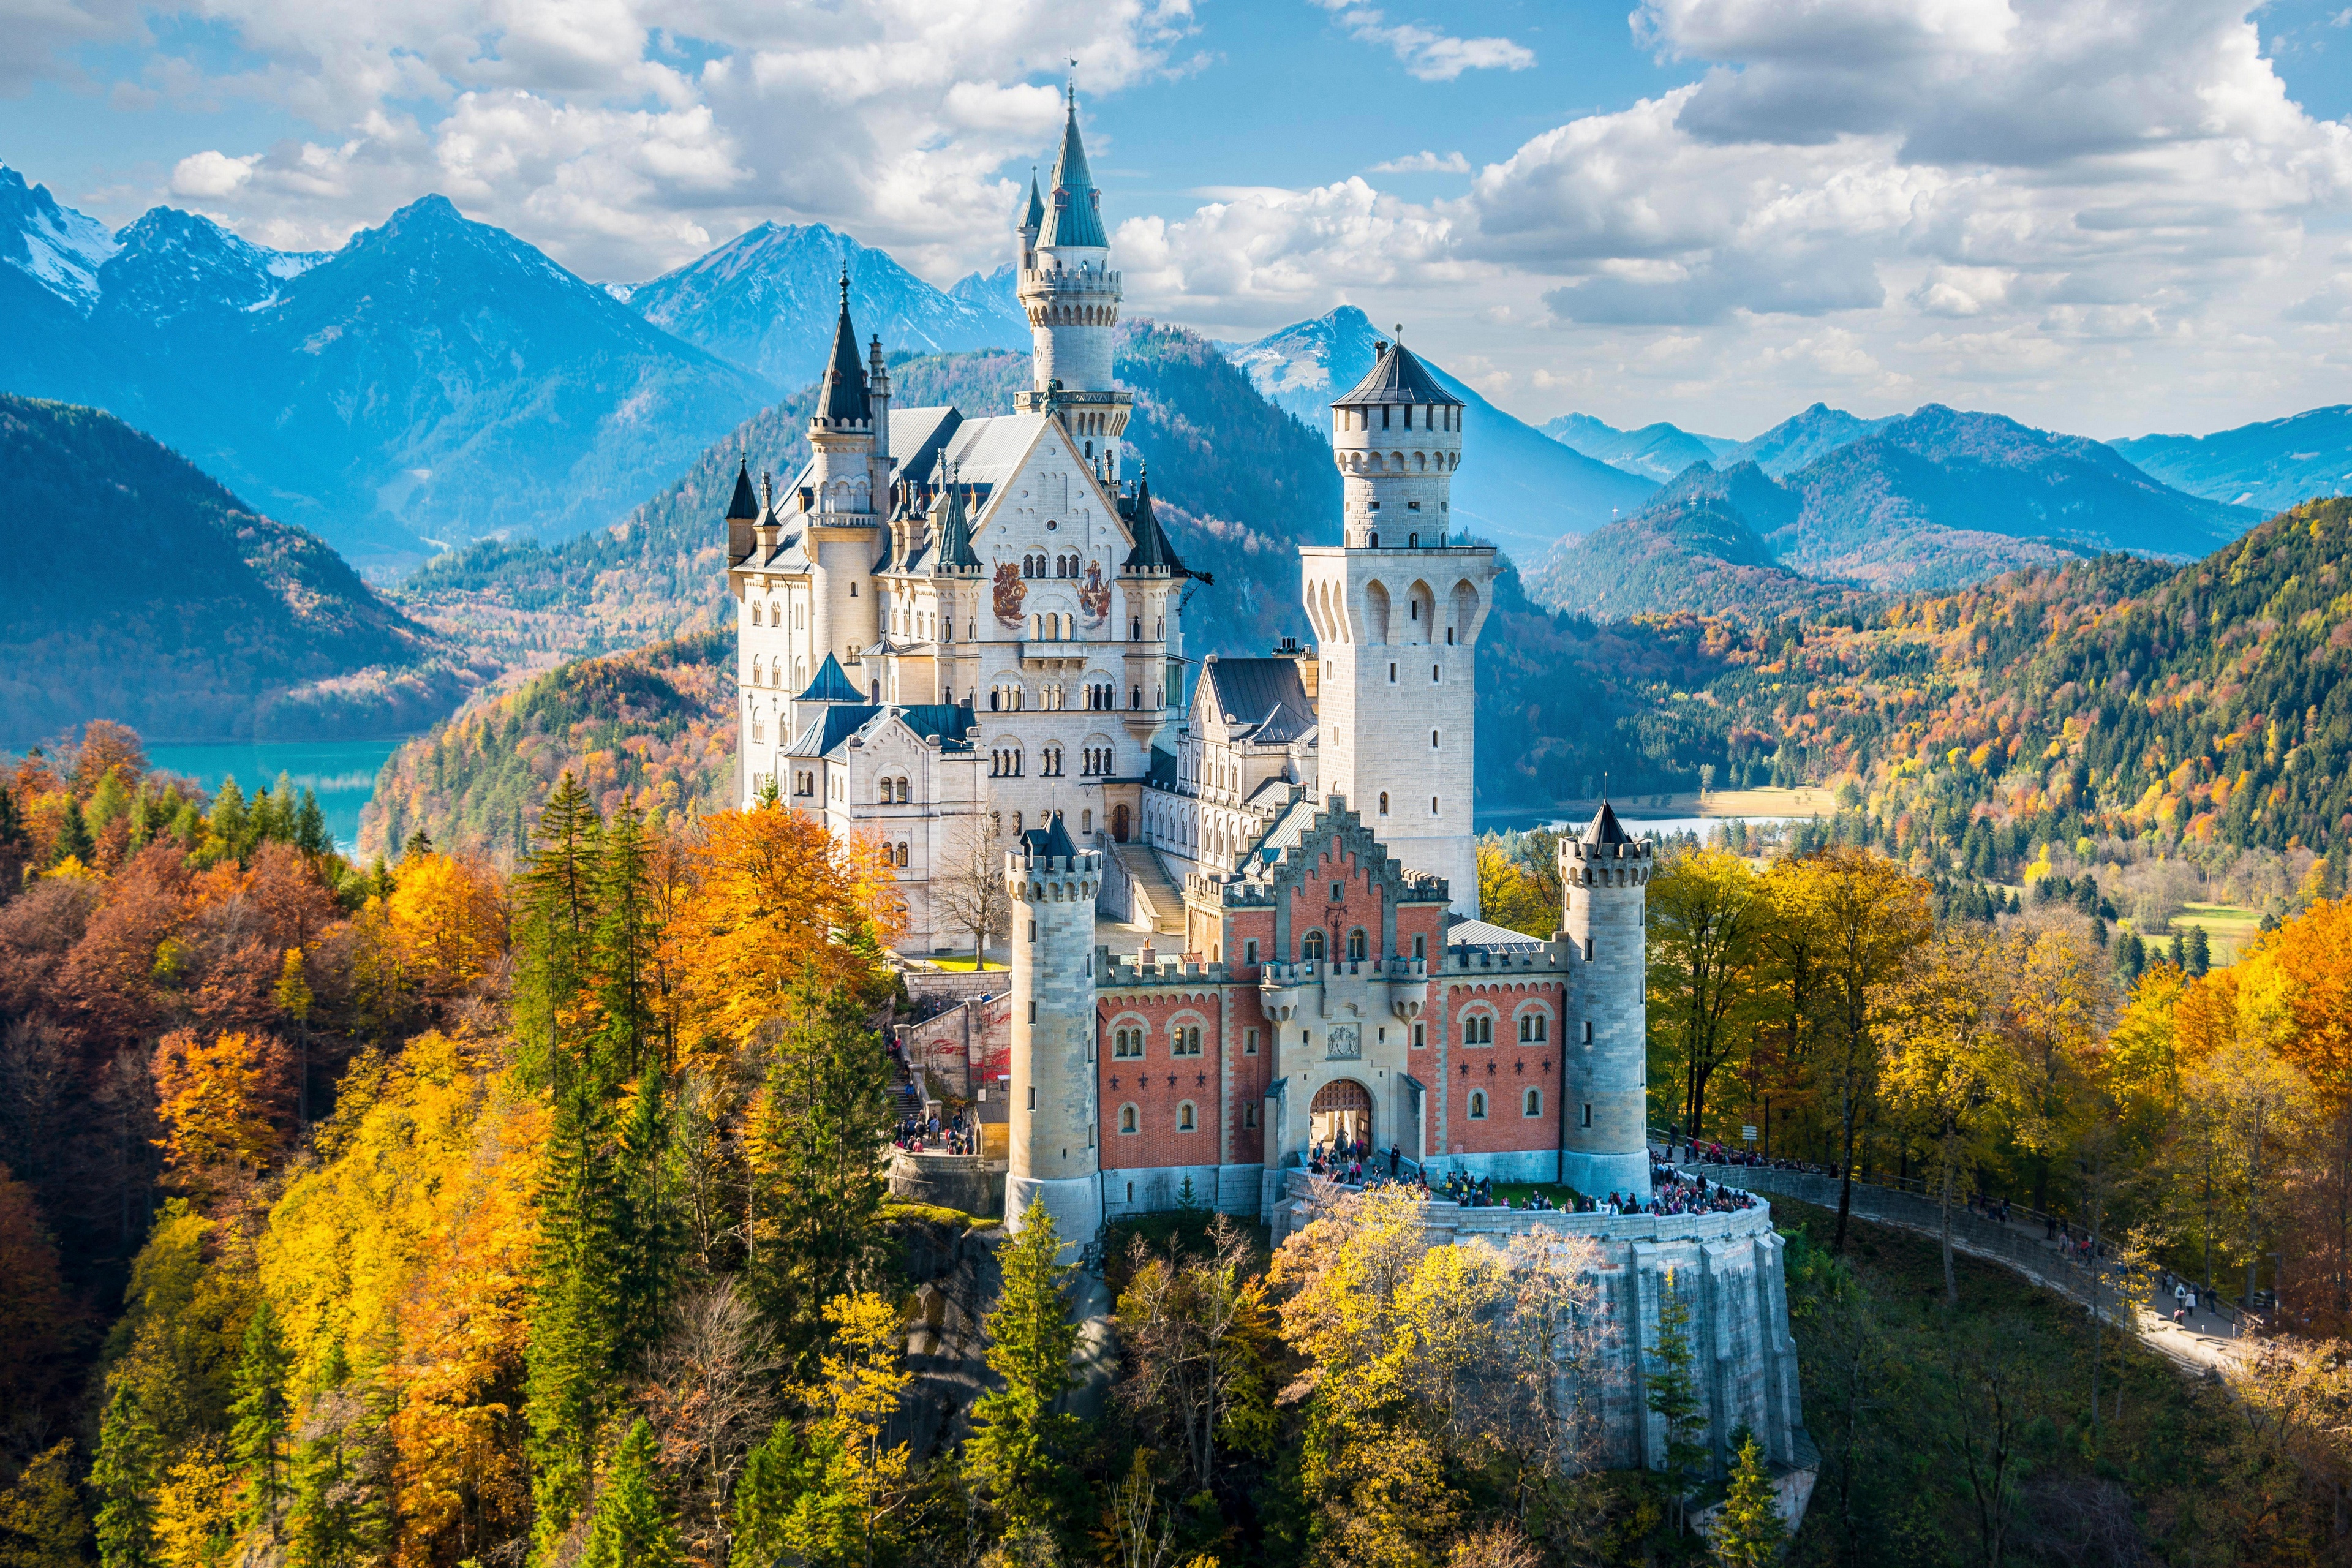 Neuschwanstein Castle in the autumn forest of Germany